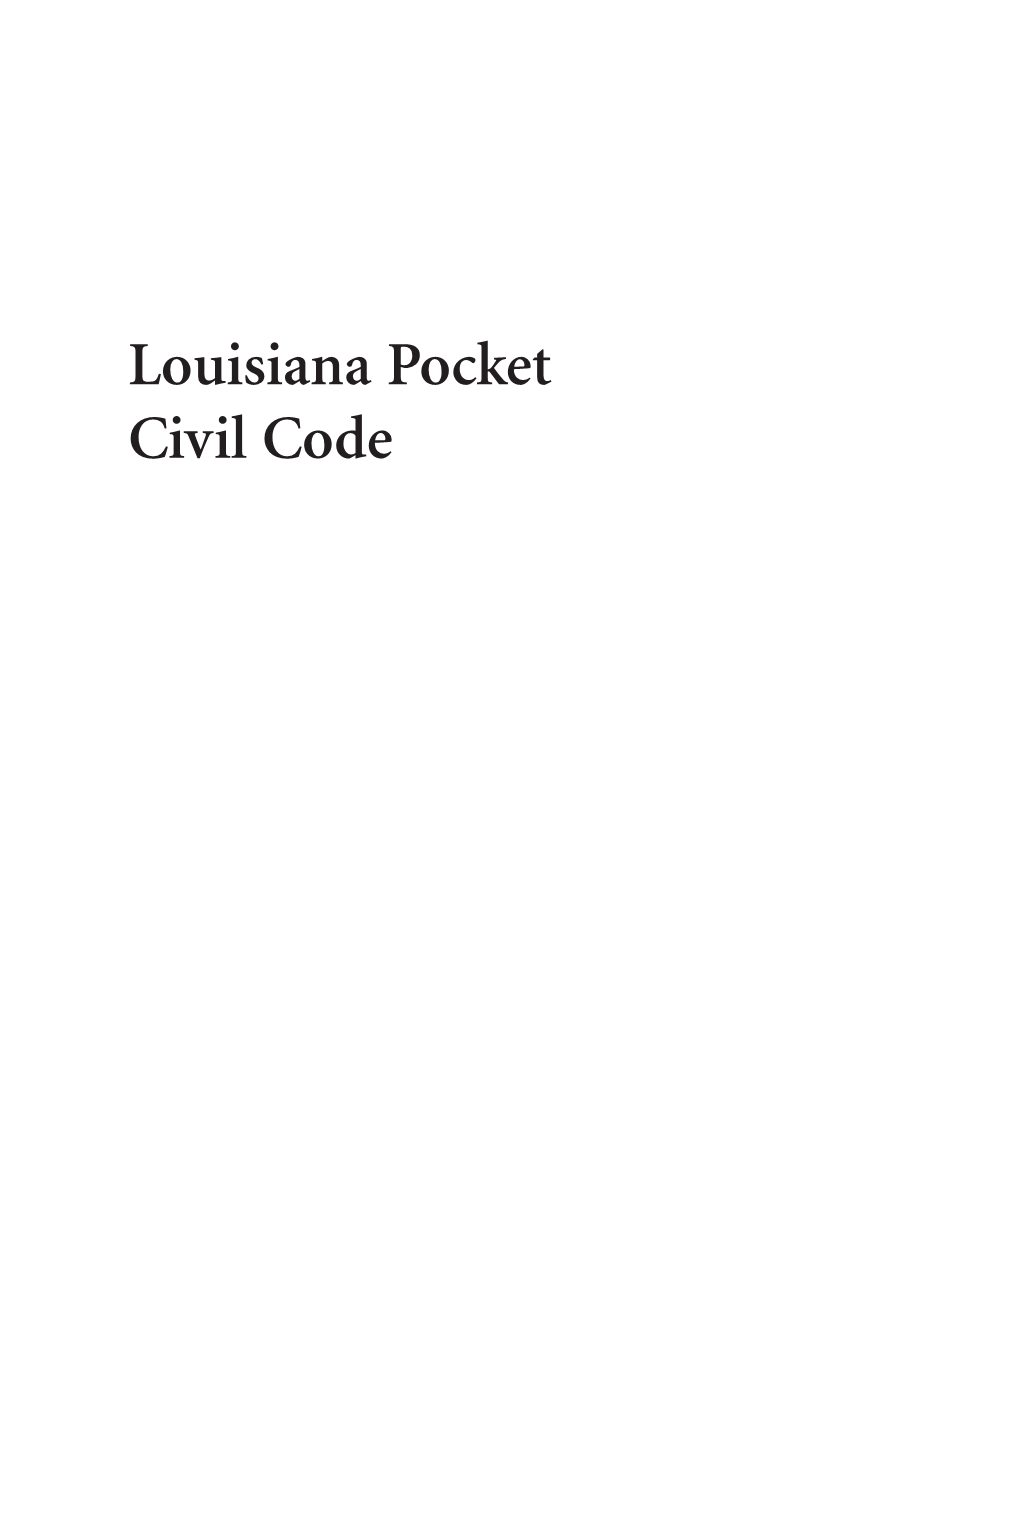 Louisiana Pocket Civil Code Levasseur 2018 00 Fmt F1.Qxp 10/20/17 10:57 AM Page Ii